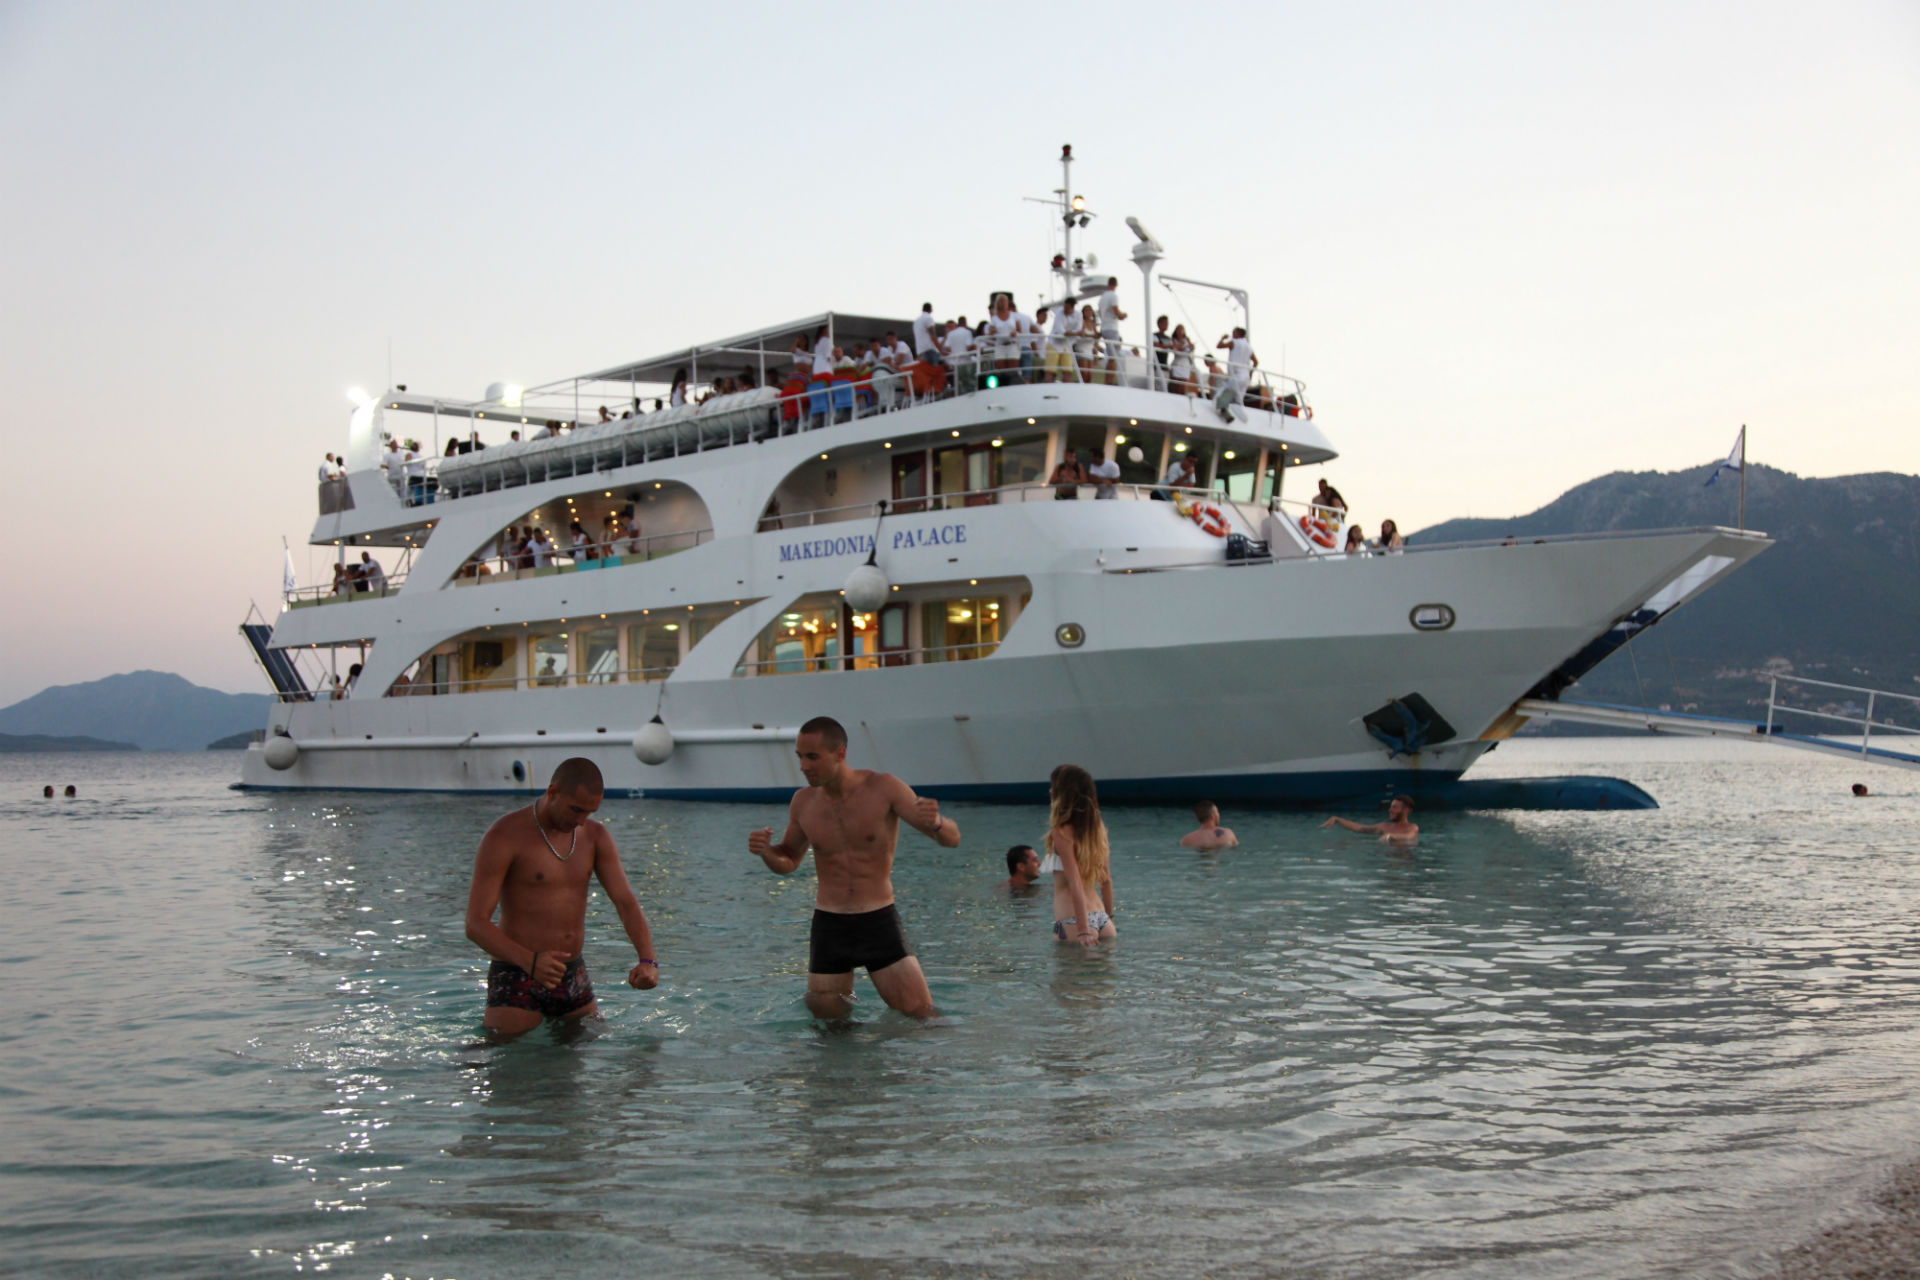 Lefkada Cruises Lefkas Cruises Κρουαζιέρες Λευκάδα Makedonia Palace White Party swim boys